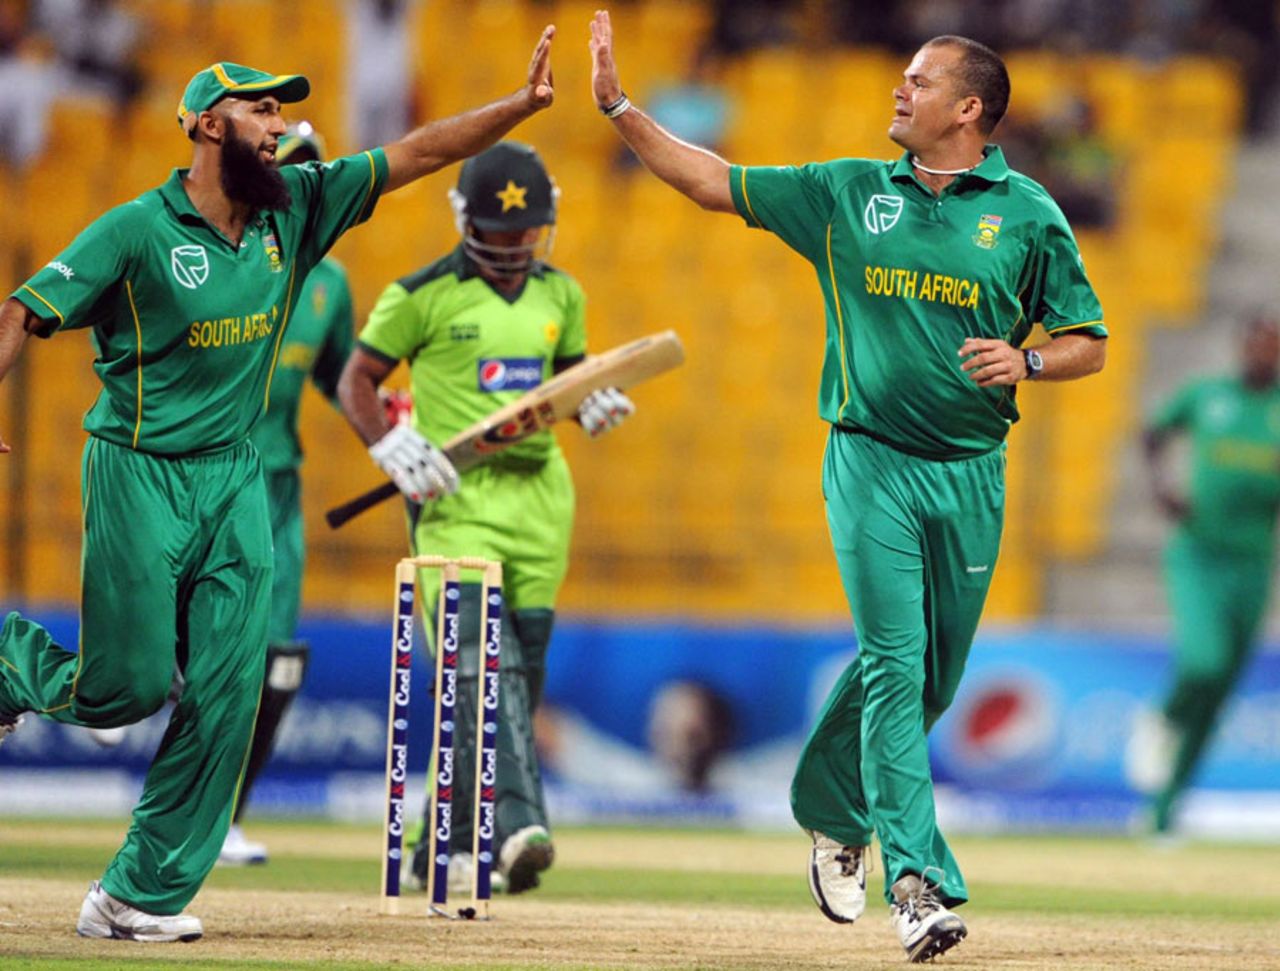 Hashim Amla and Charl Langeveldt celebrate a wicket, Pakistan v South Africa, 2nd ODI, Abu Dhabi, October 31 2010